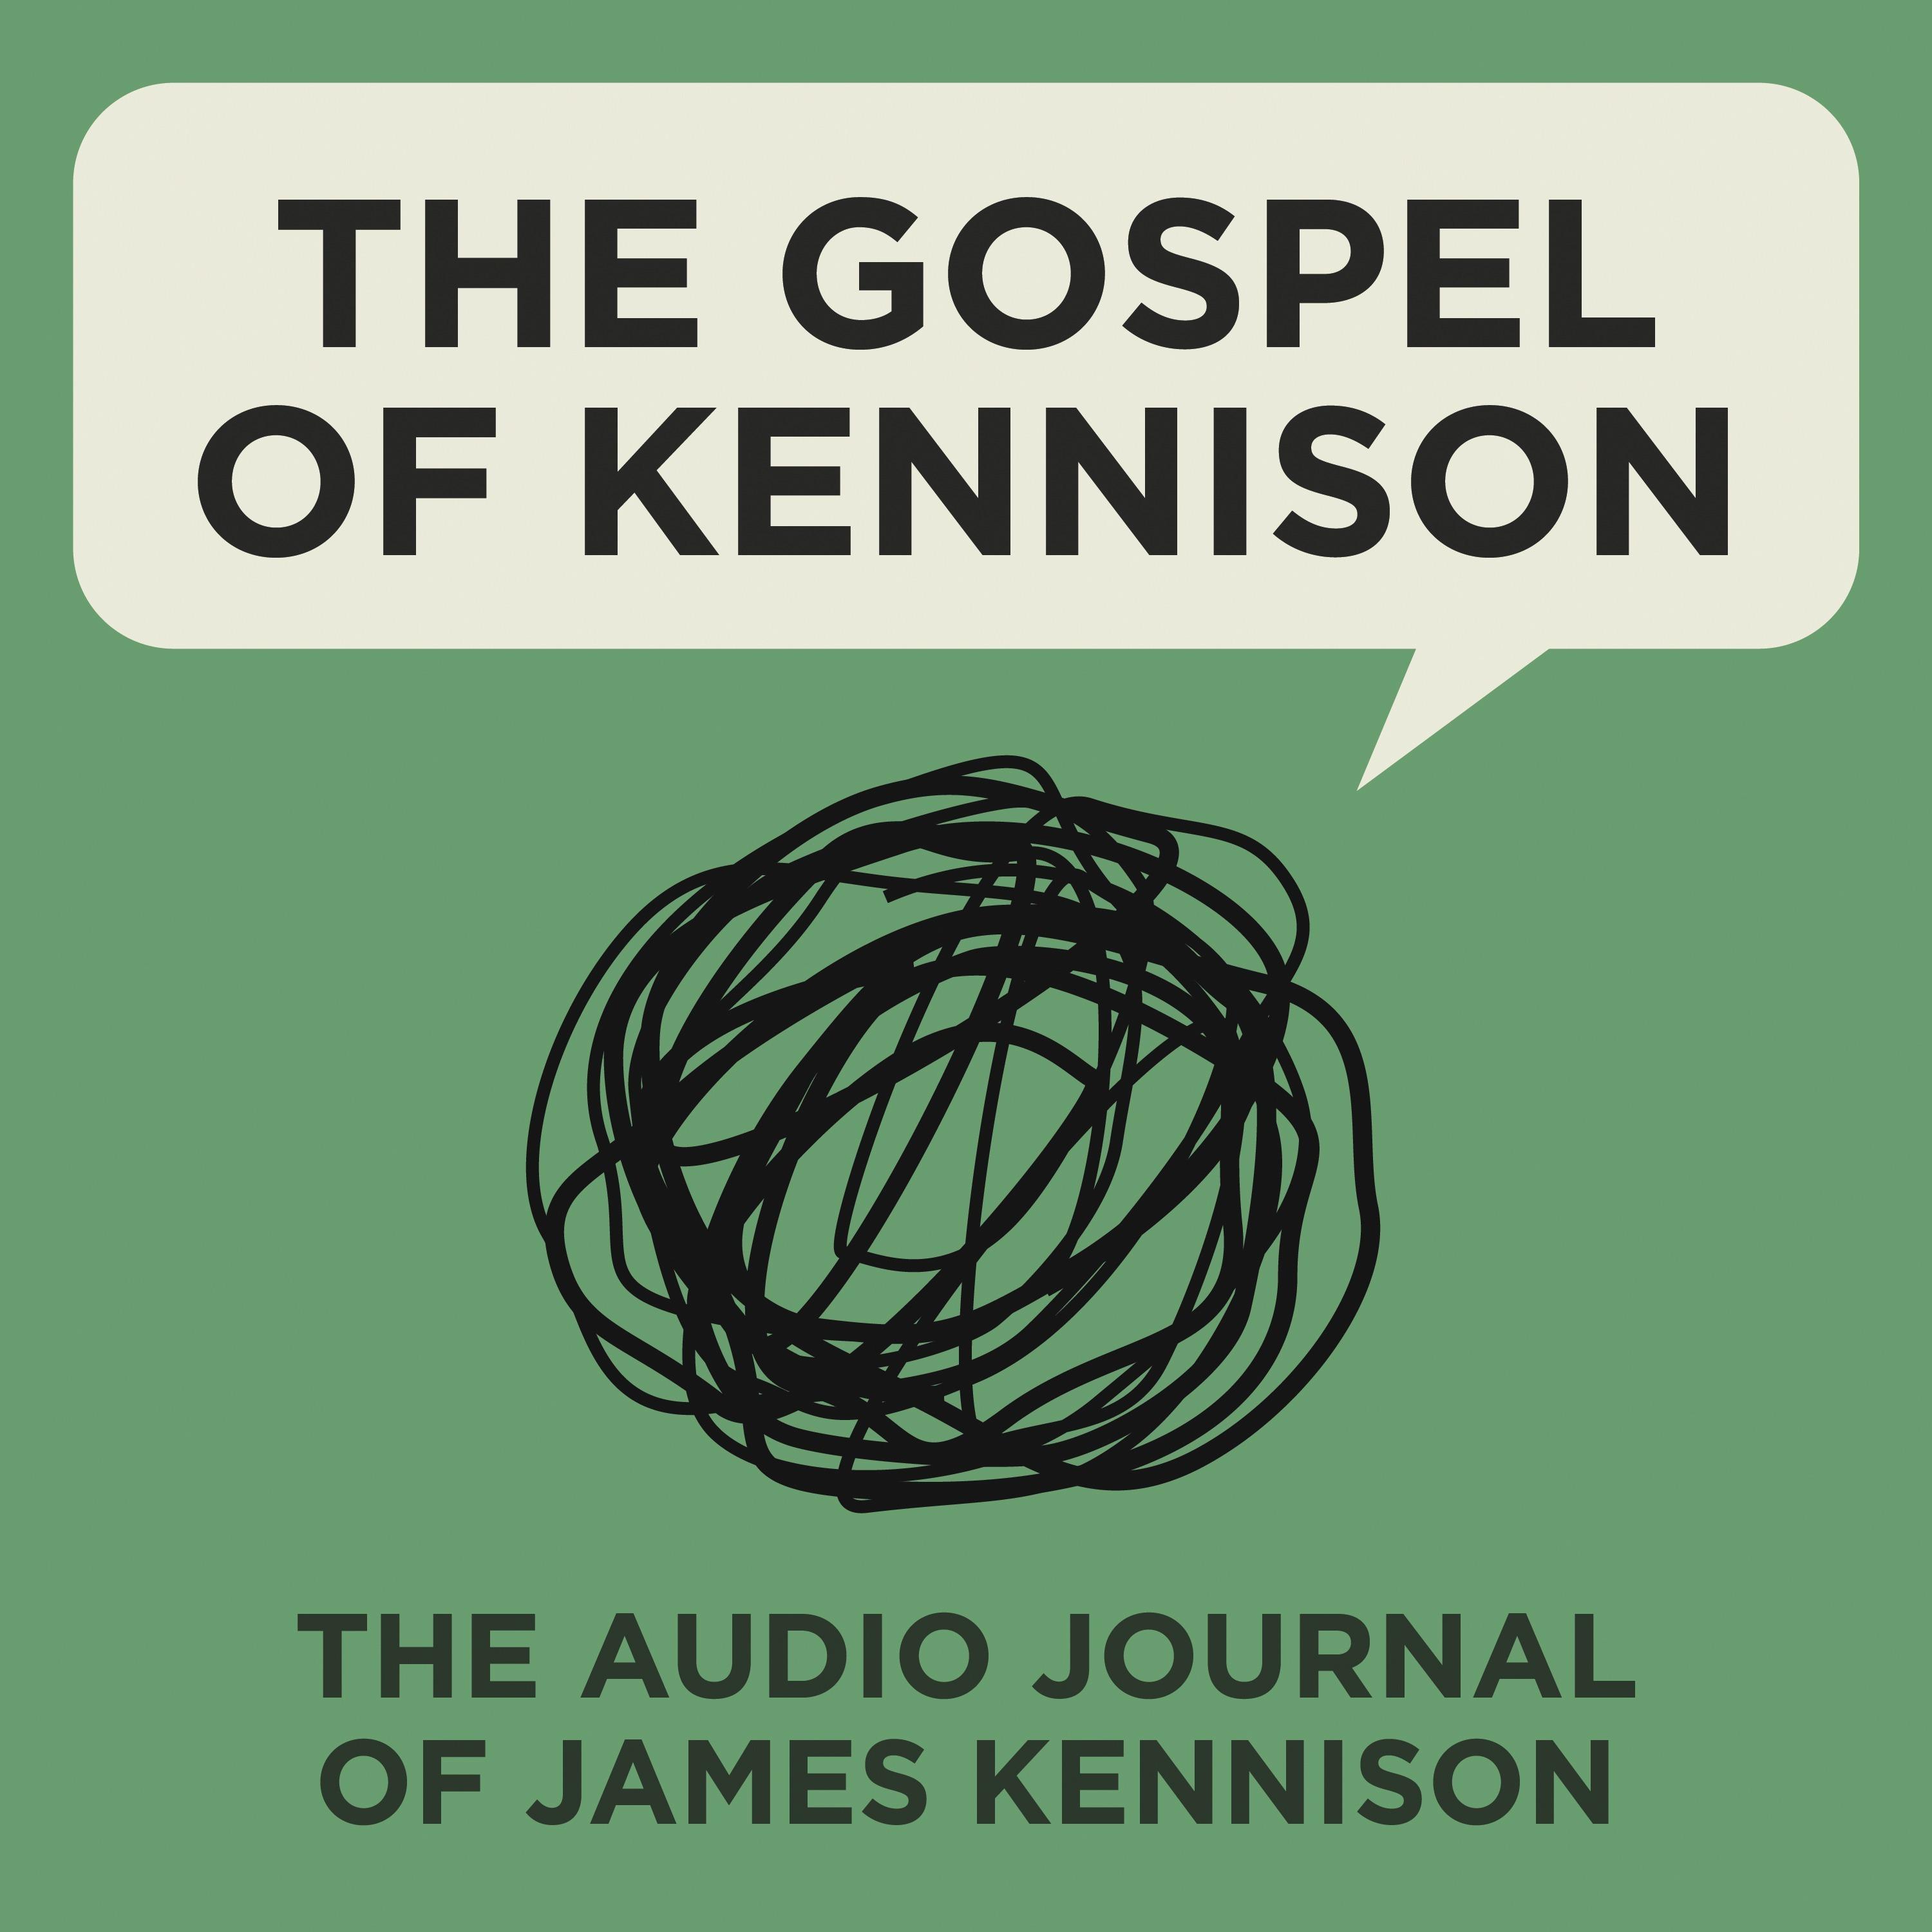 The Gospel of Kennison